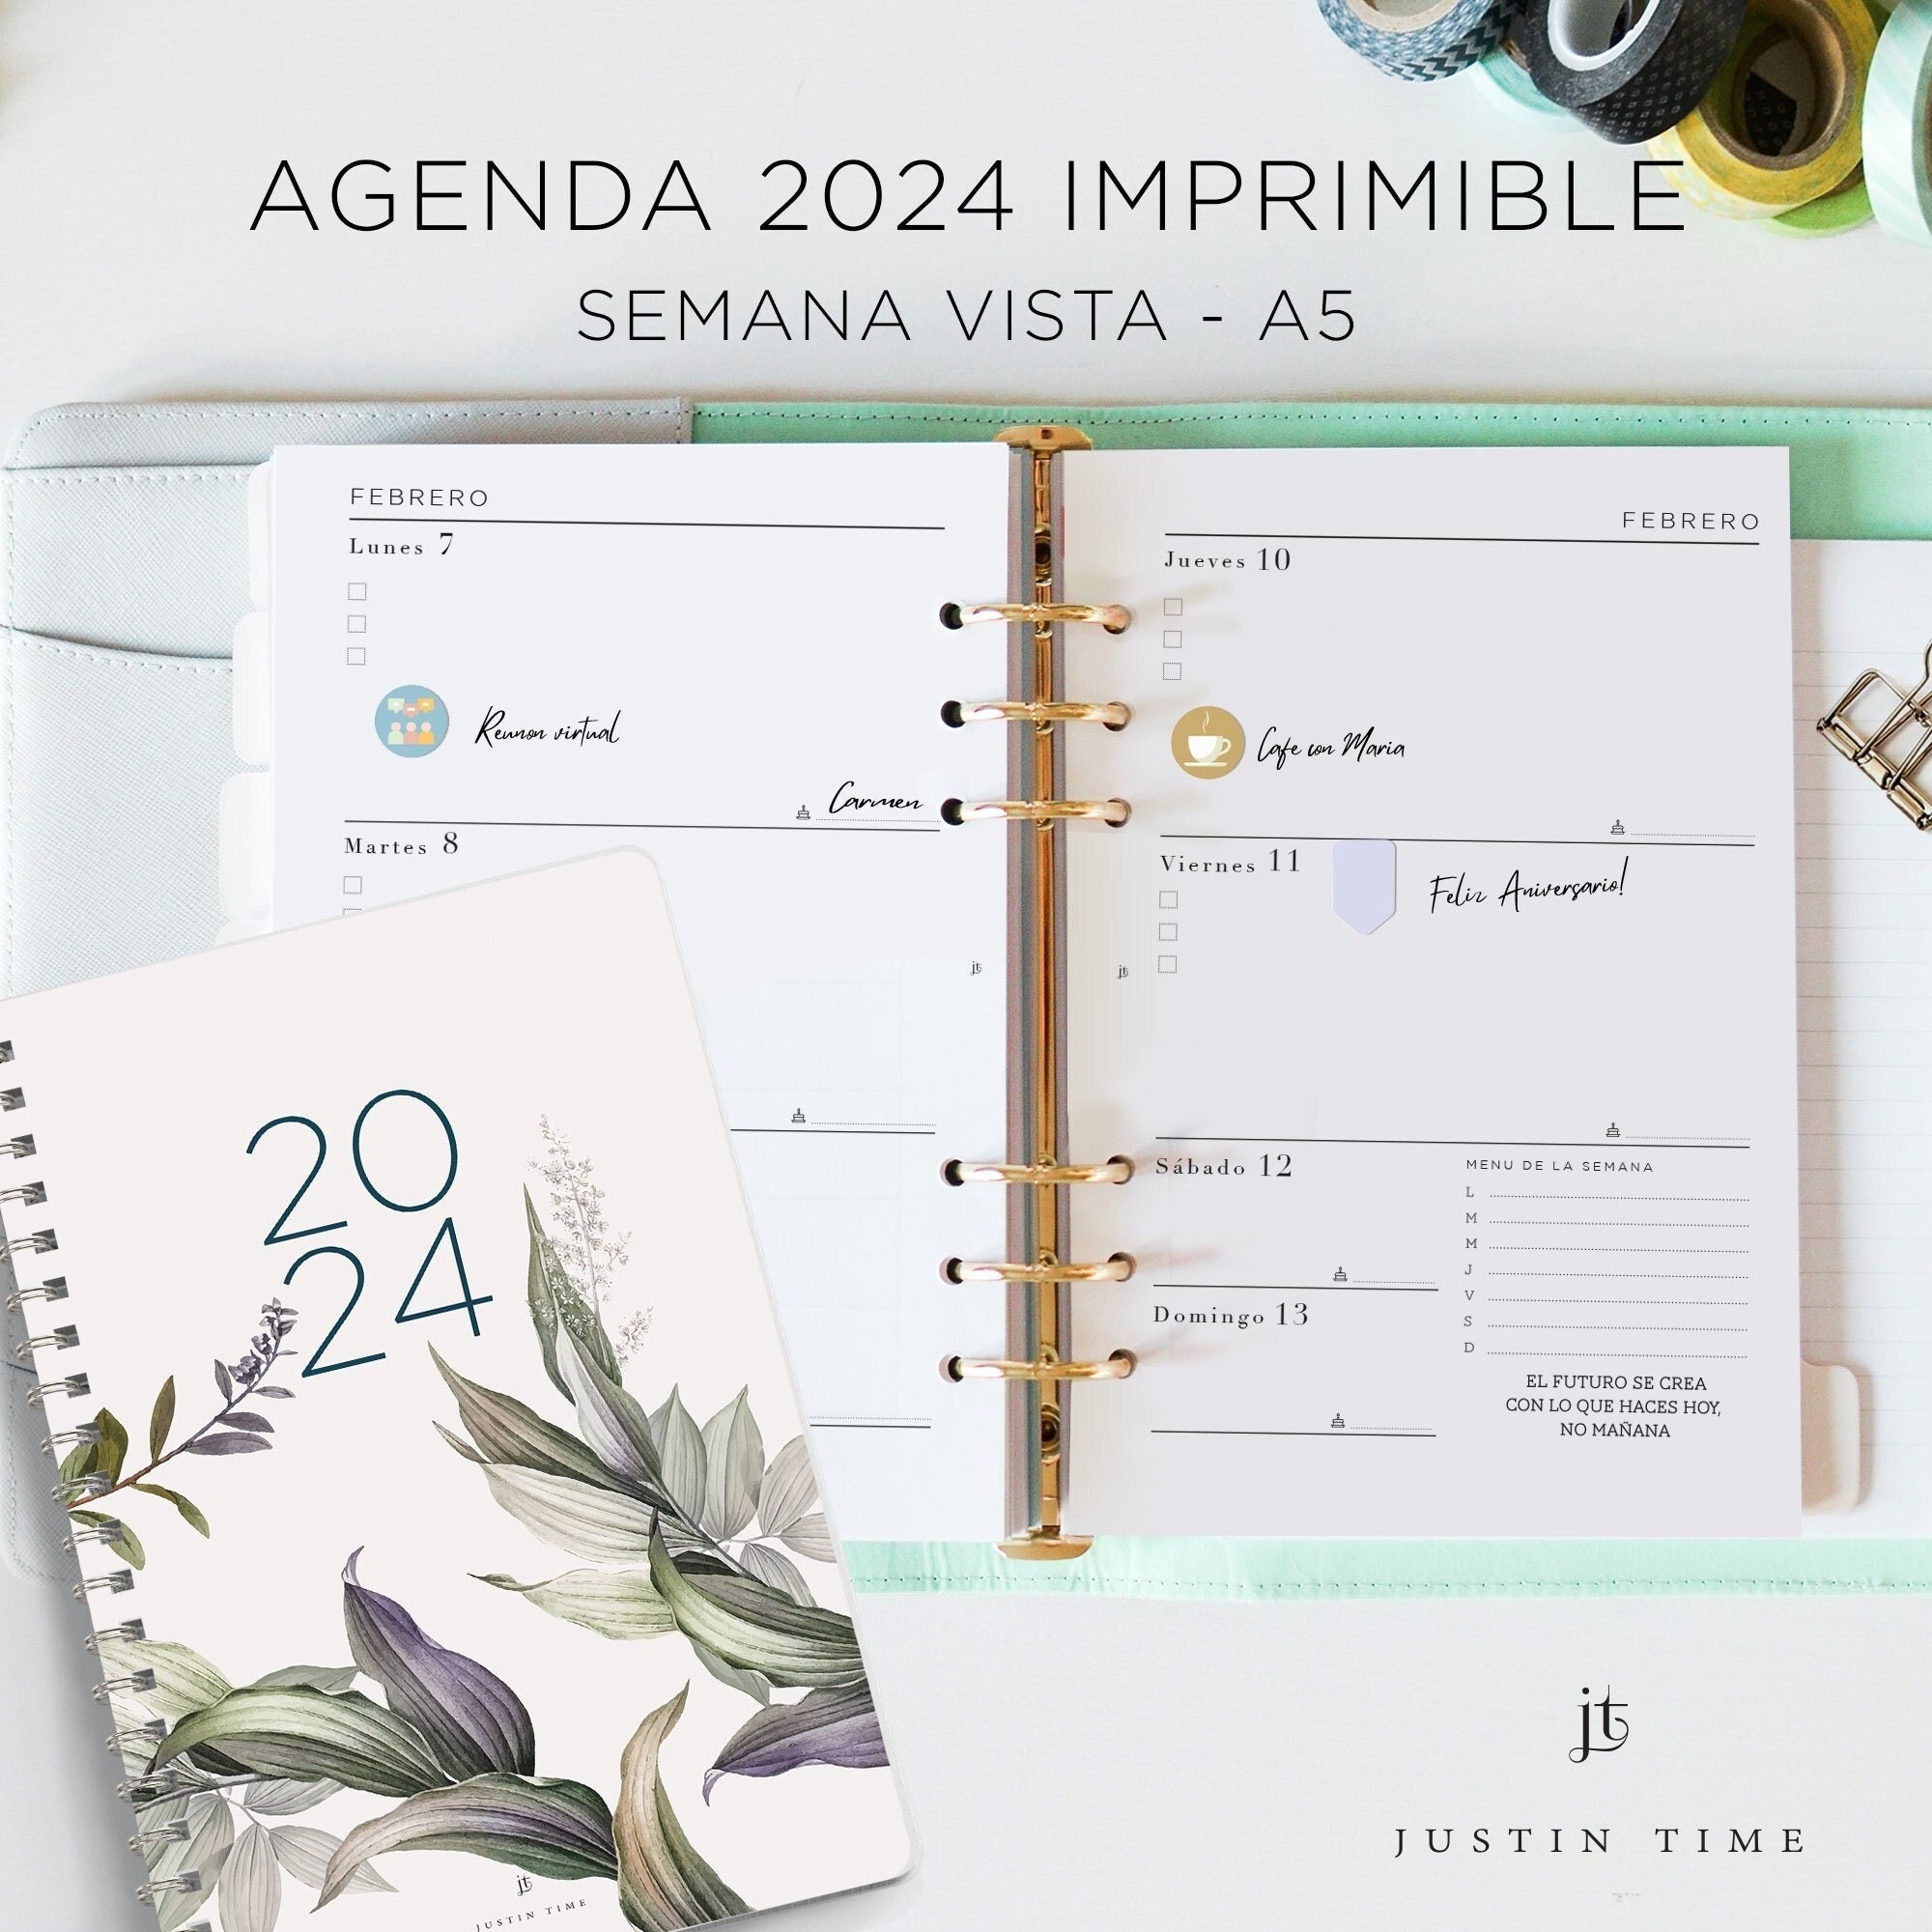 Agenda semainier 2023-2024 9,5 x 18 cm Boréal - Scrapmalin